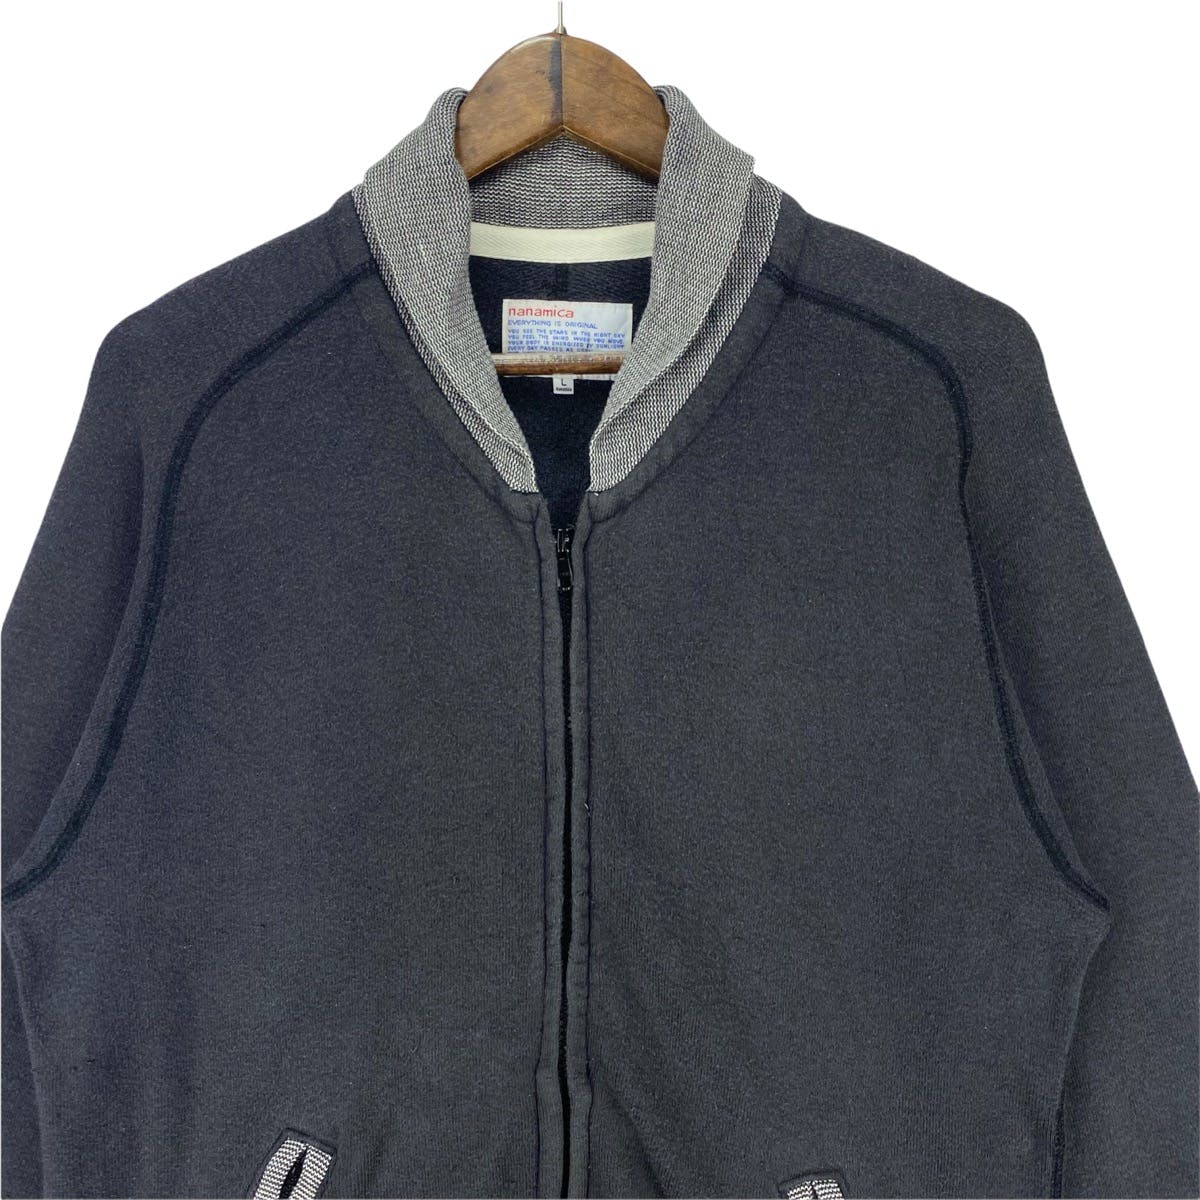 Nanamica Full Zip Shawl Collar Sweater Jacket - 4